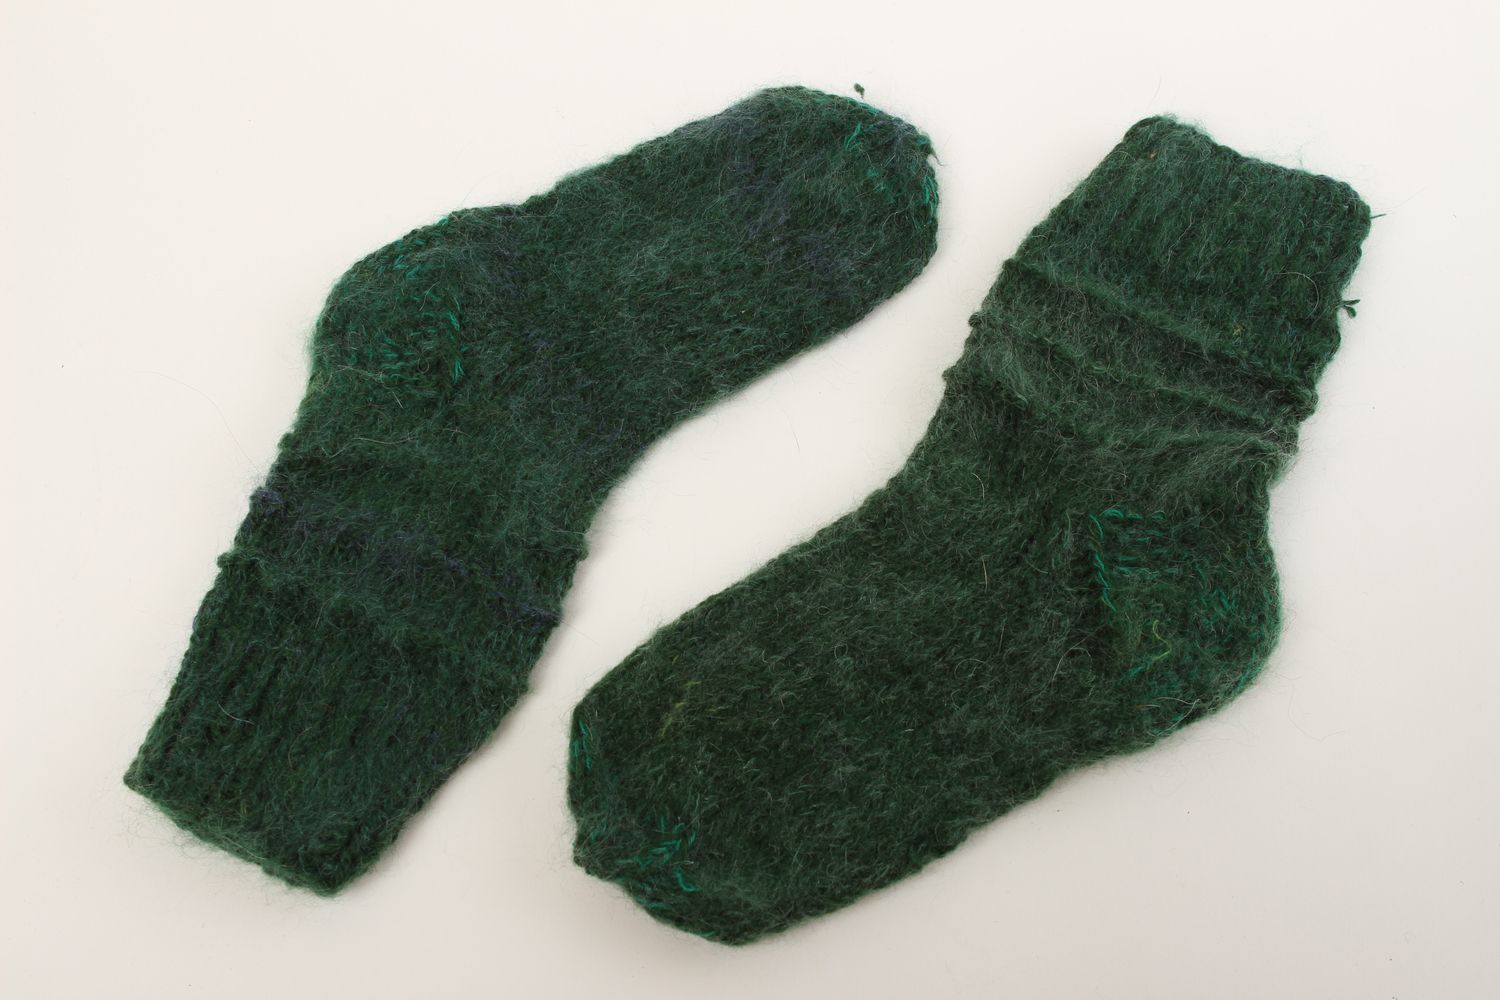 Handmade green woolen socks knitted socks winter clothes Christmas gift ideas photo 2